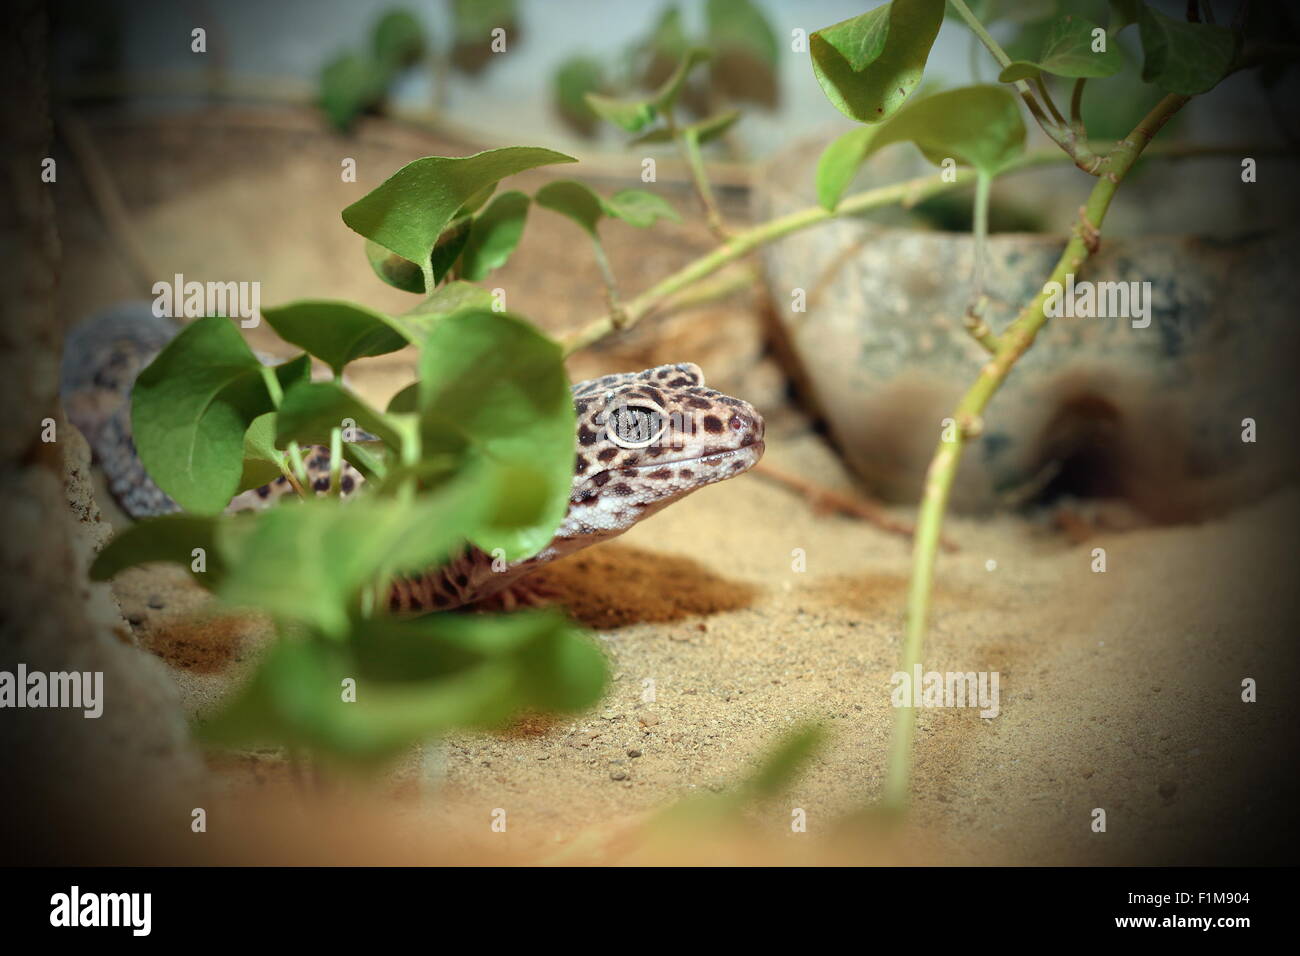 leopard gekko lizard hiding on a terrarium Stock Photo - Alamy